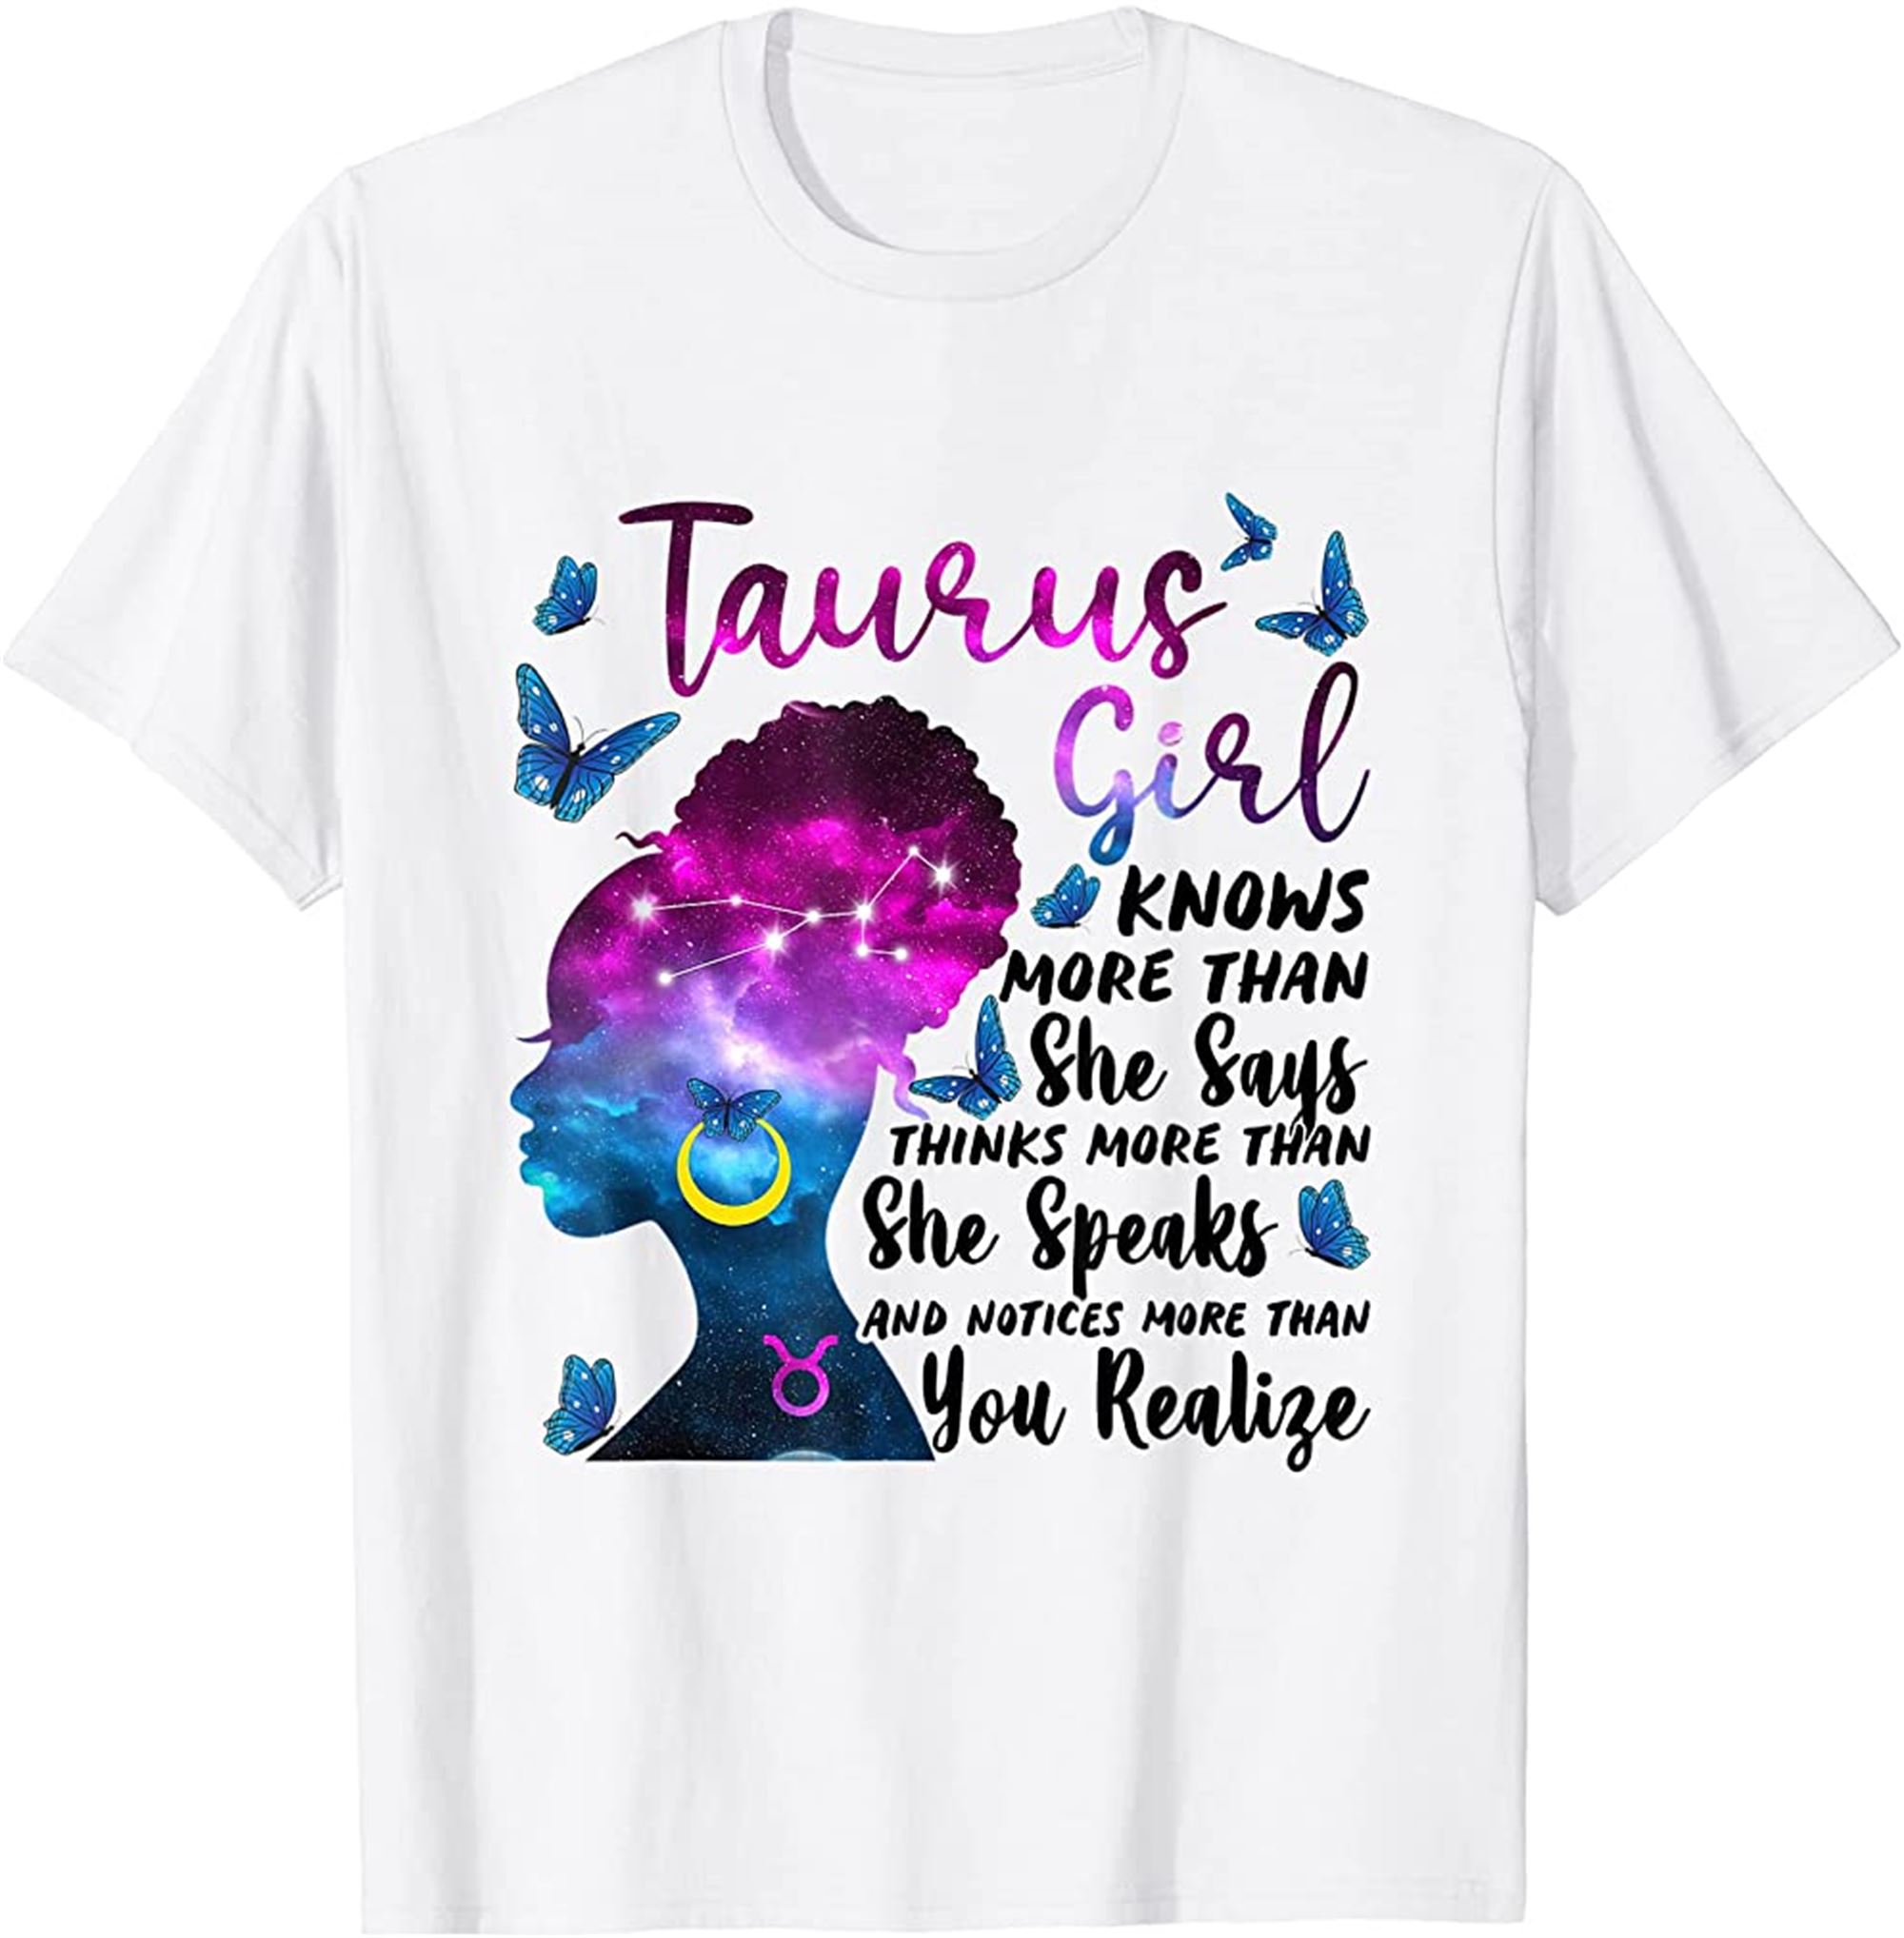 Taurus Girl Black Woman Birthday T-shirt Size Up To 5xl